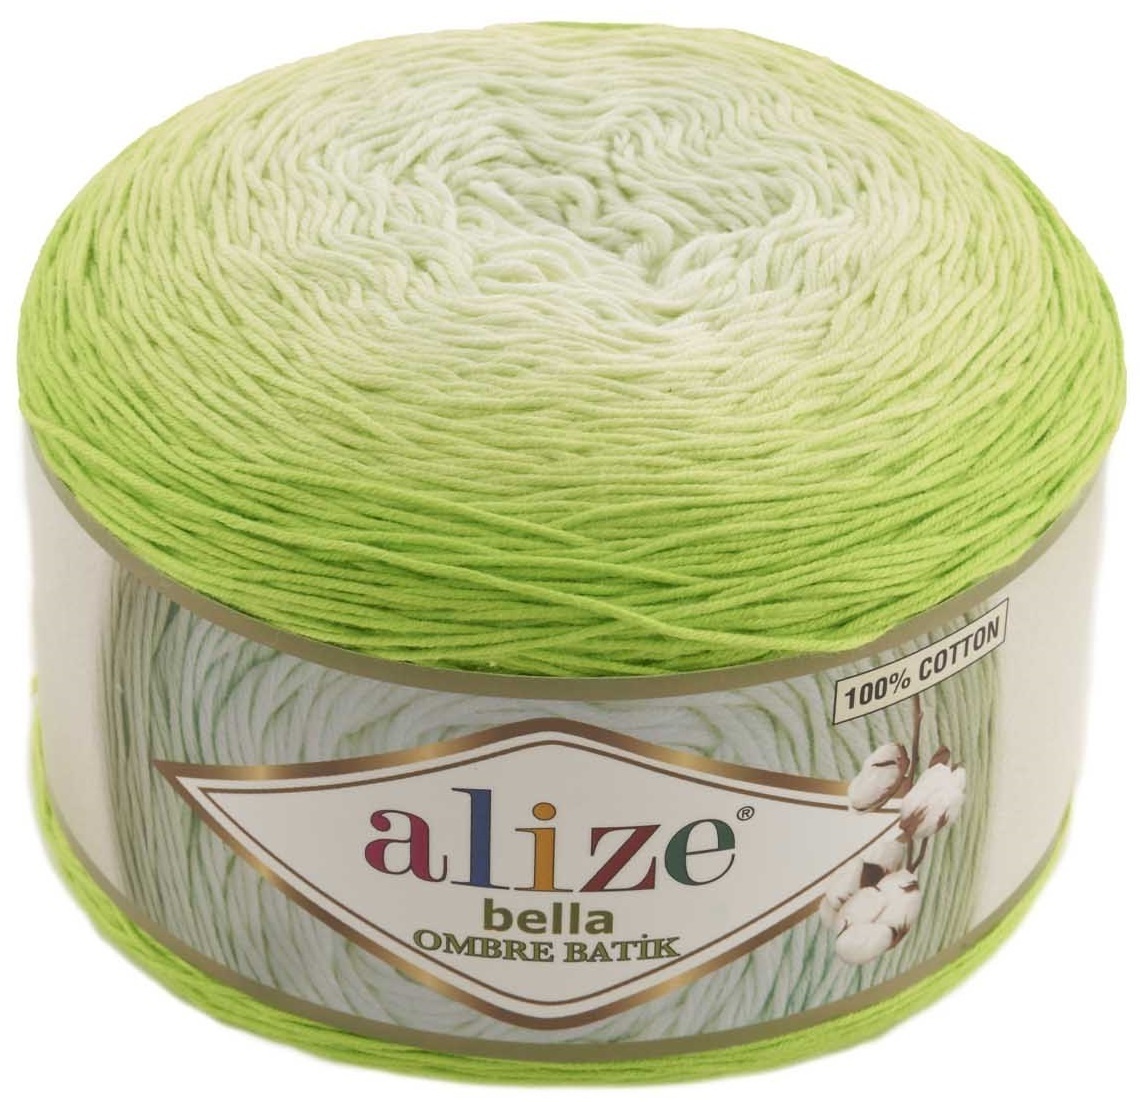 Alize Bella Ombre Batik 100% cotton, 2 Skein Value Pack, 500g фото 11